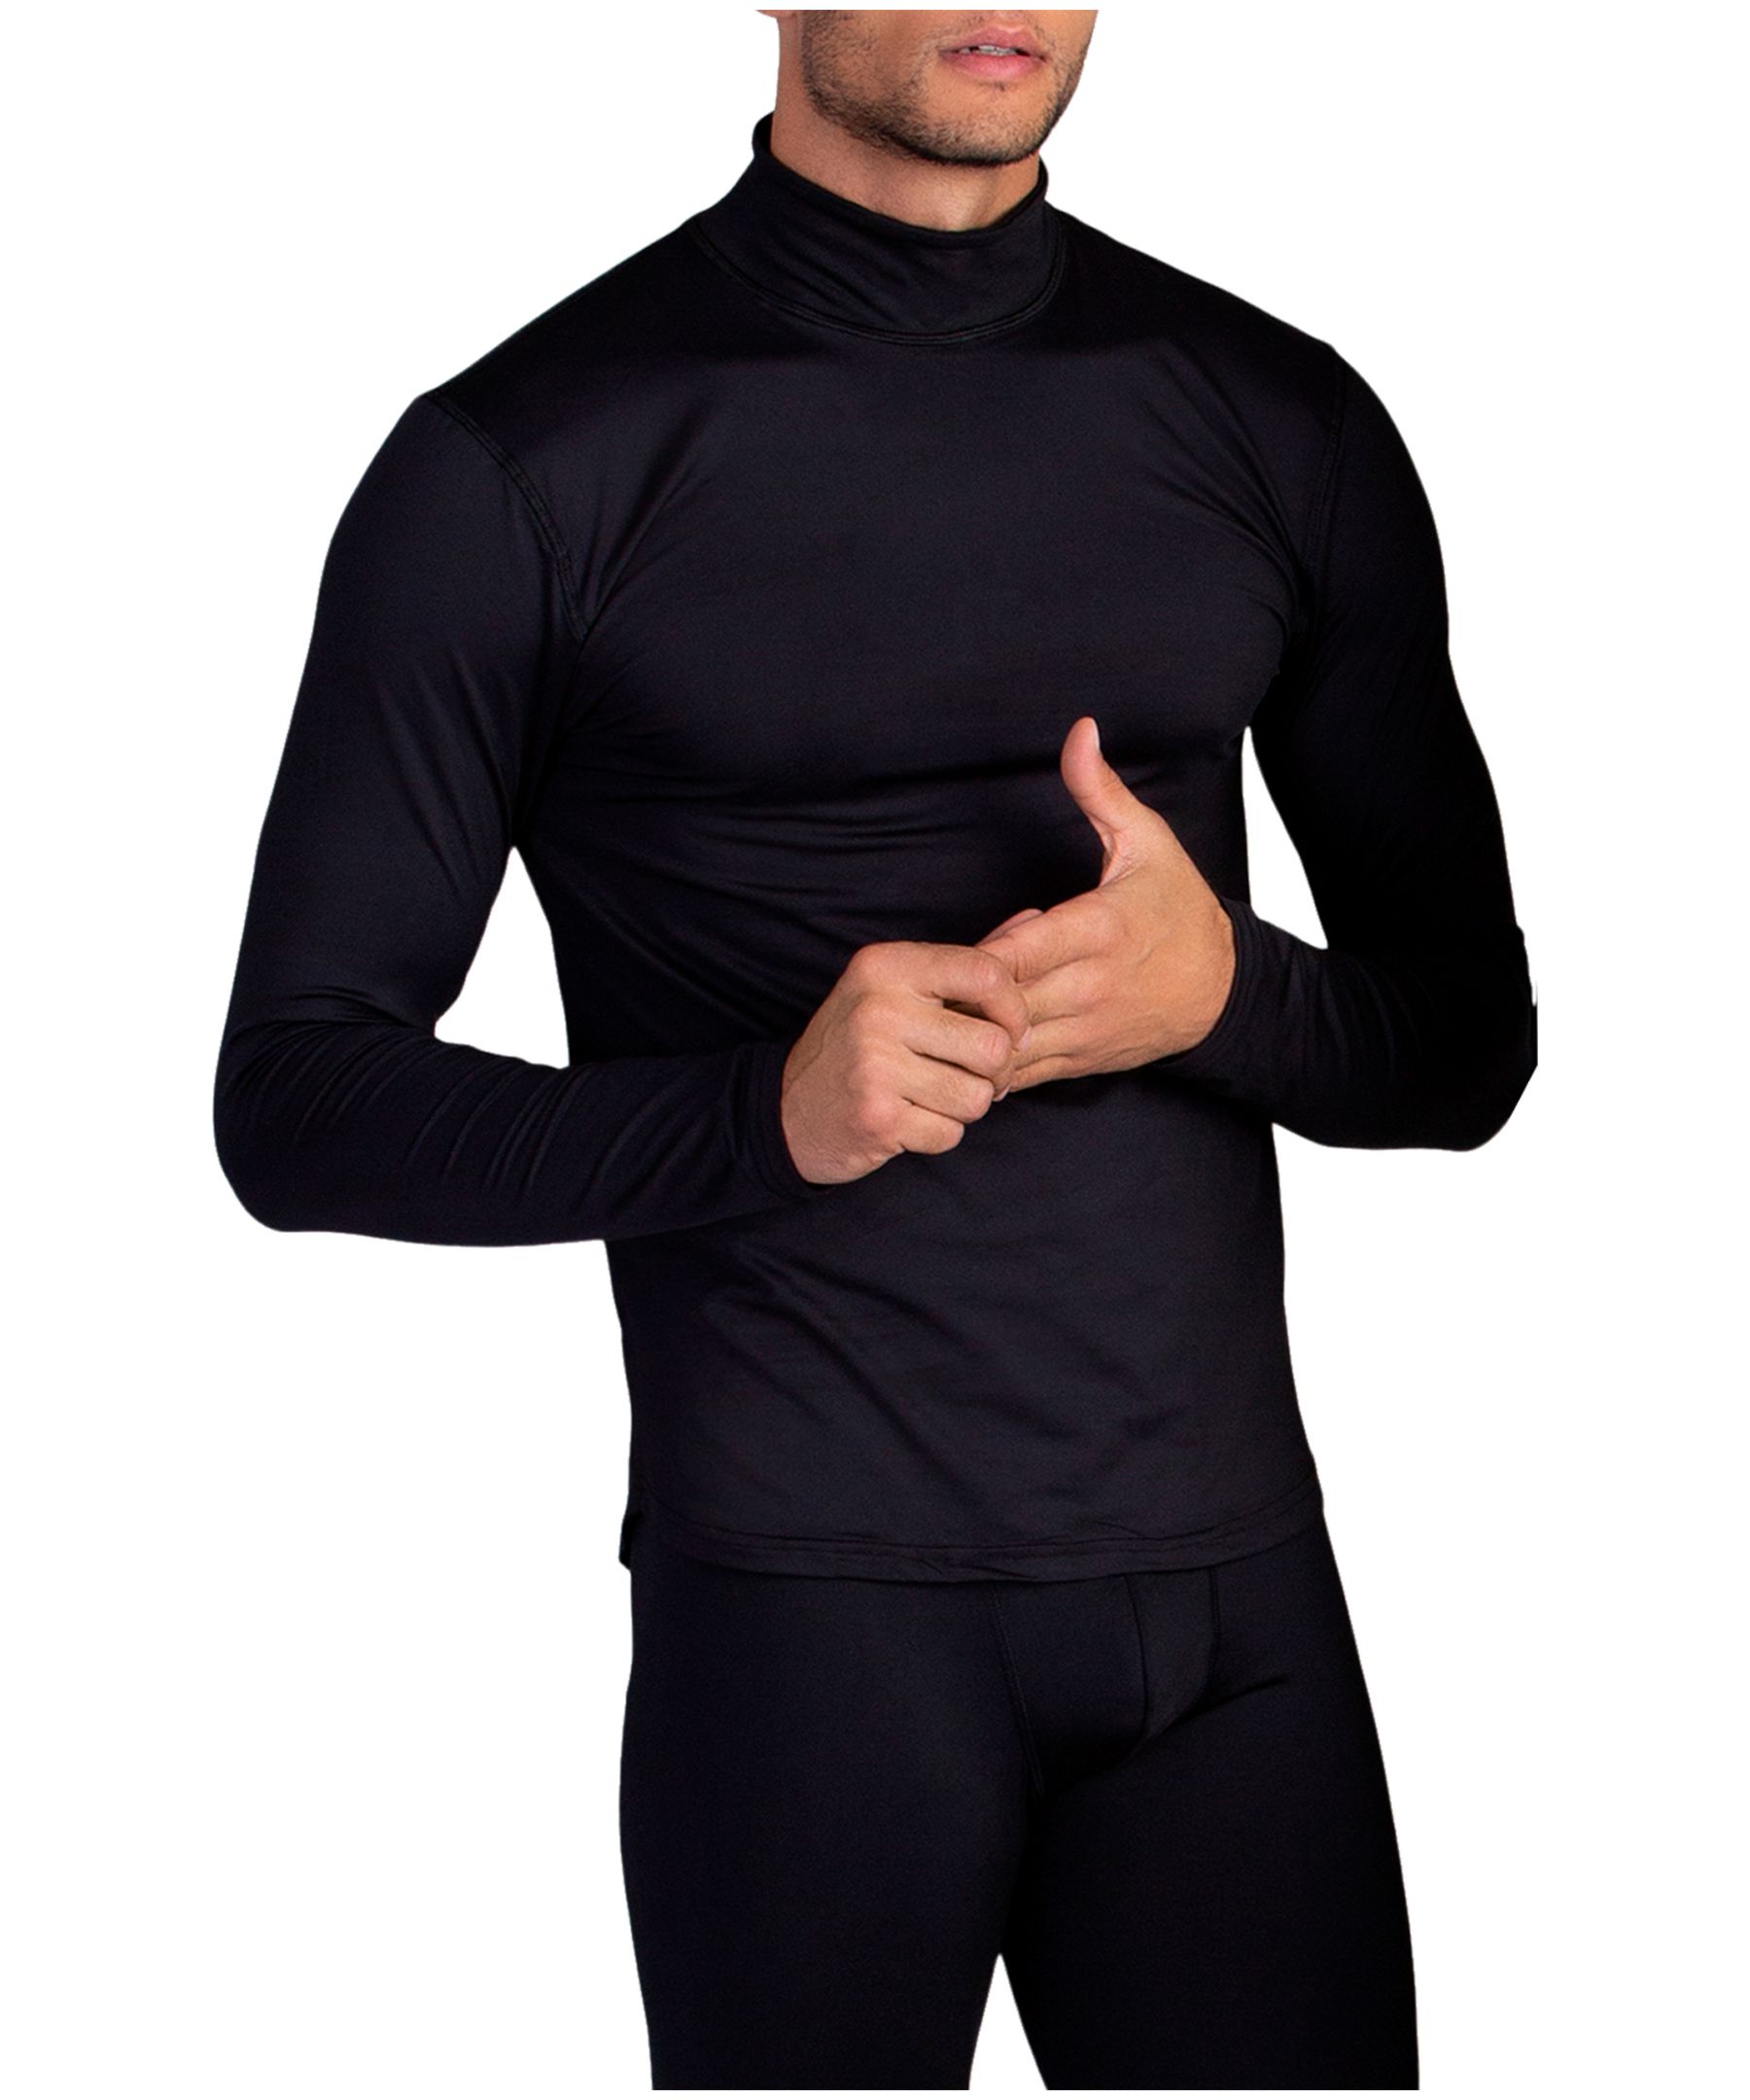 Watson's Men's Performance Base Layer Thermal Long Sleeve Top